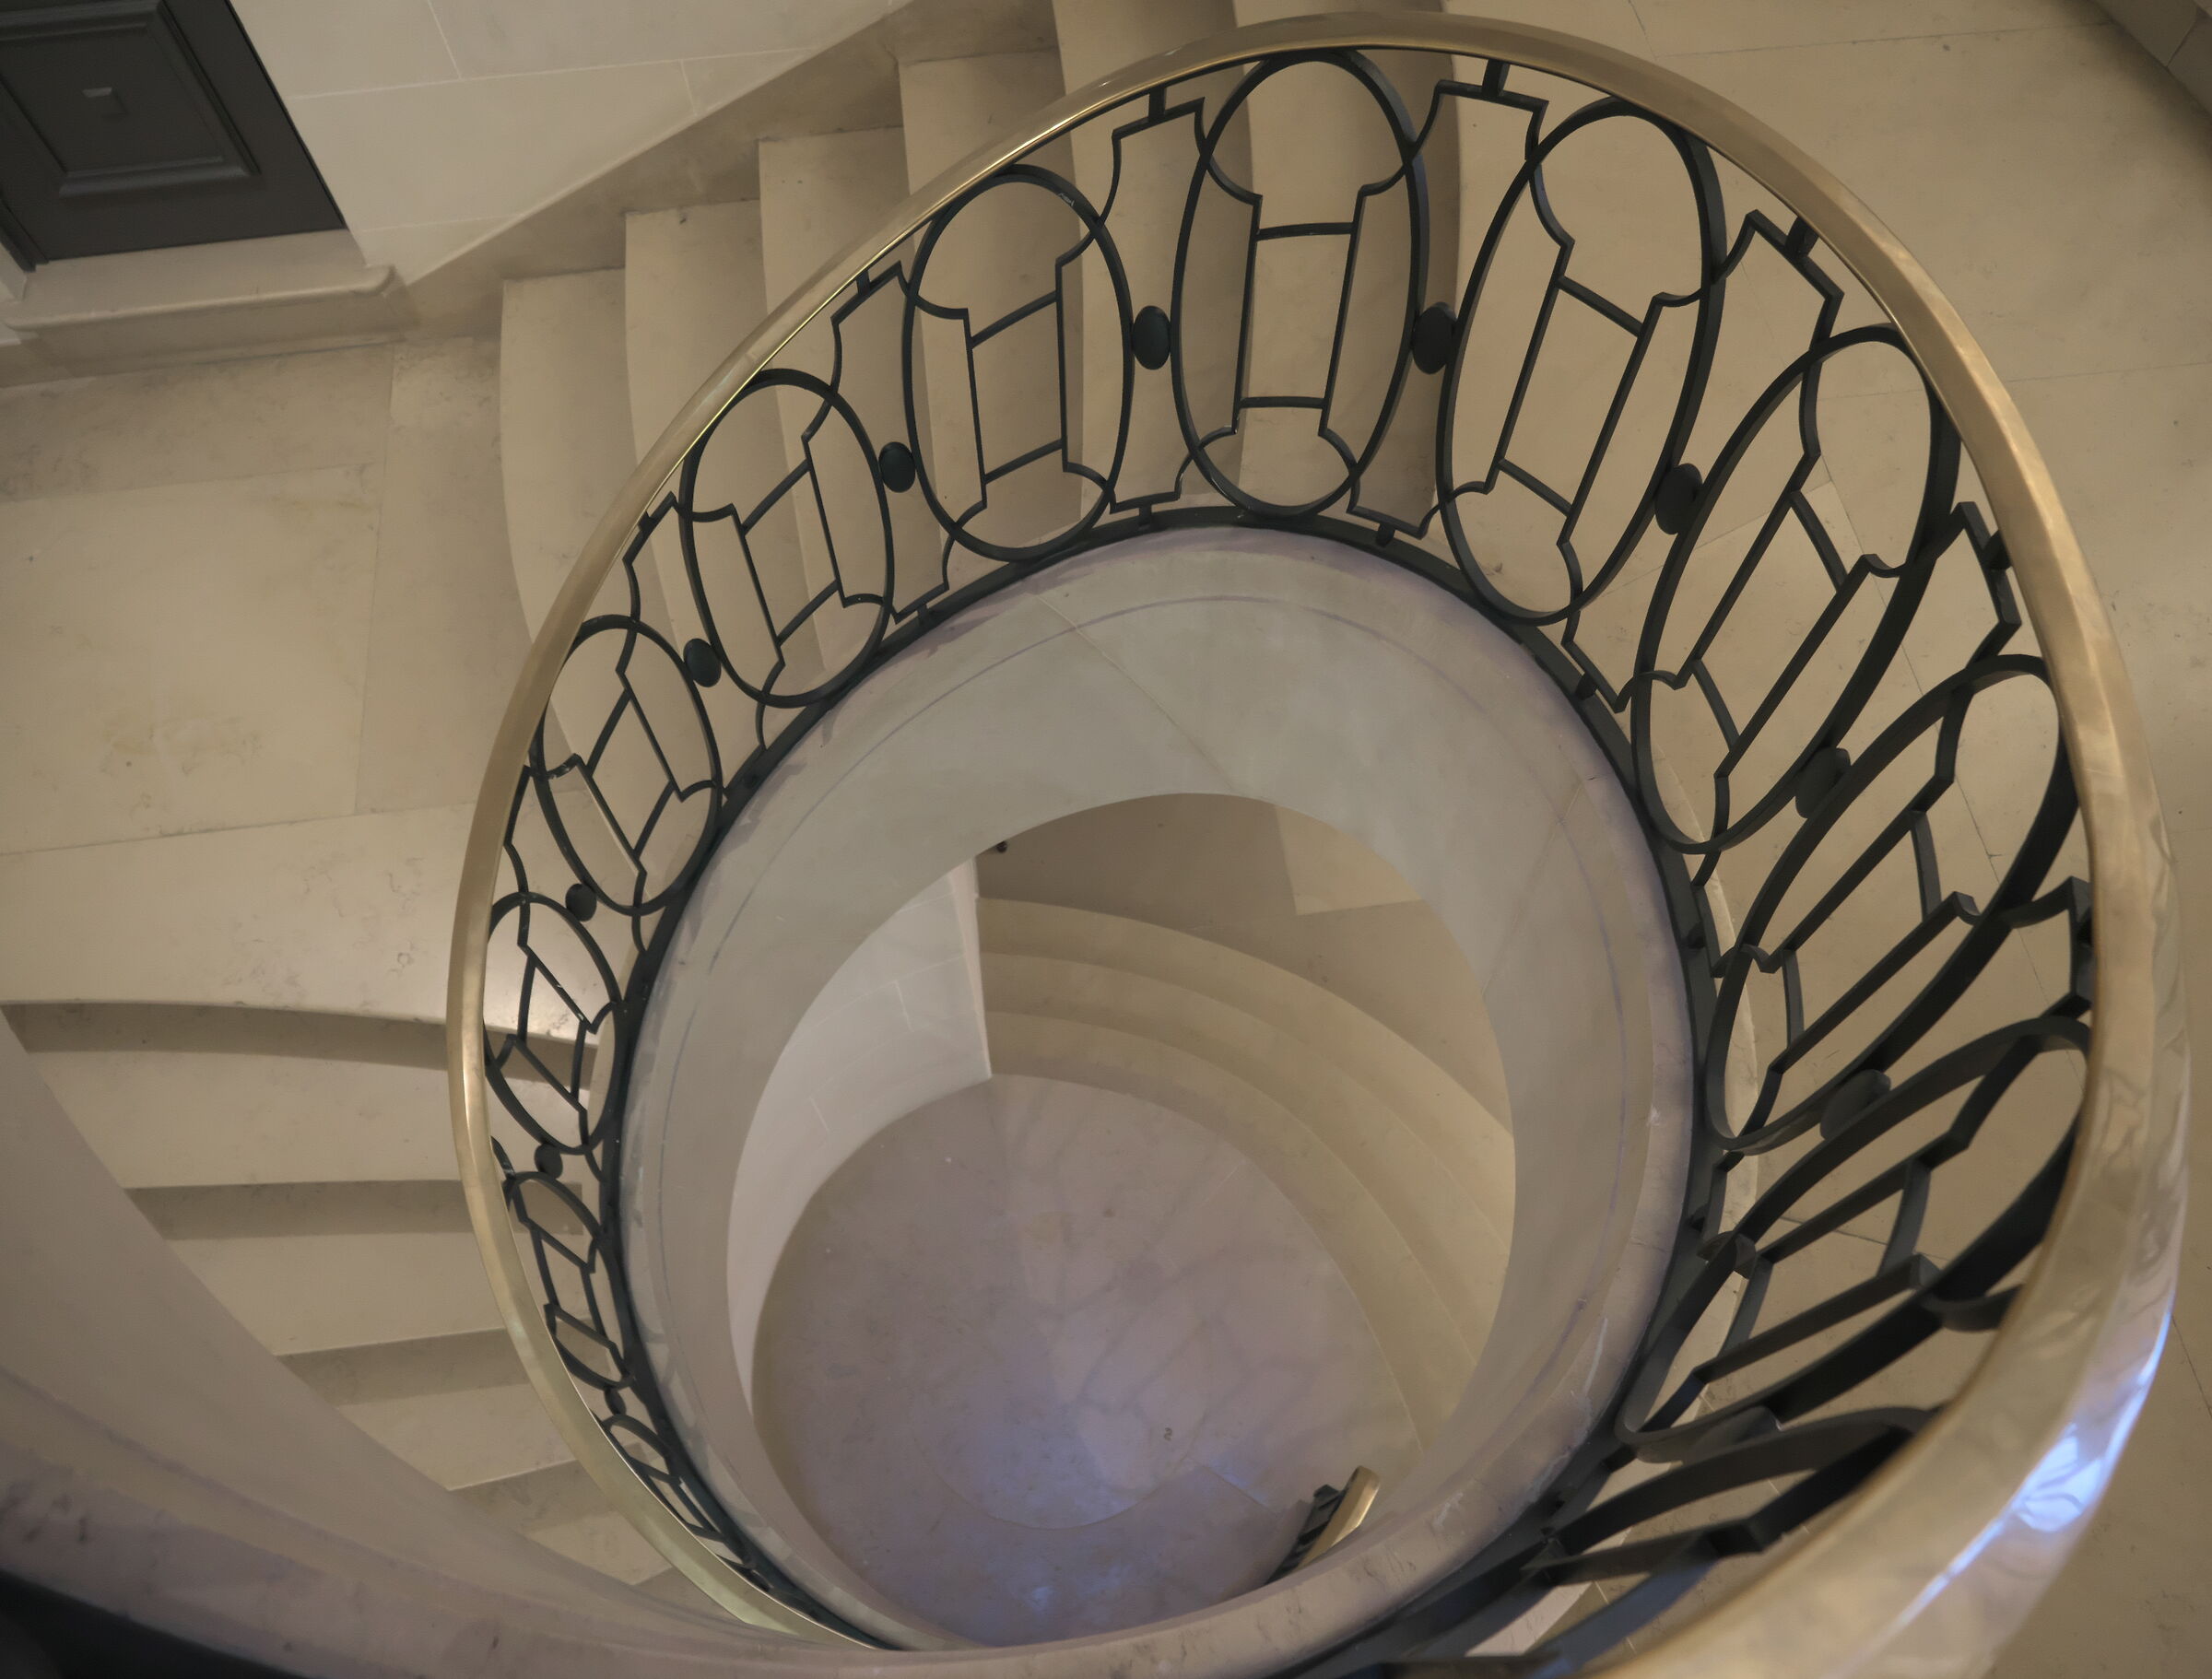 Bibliothèque National - Spiral staircase ...